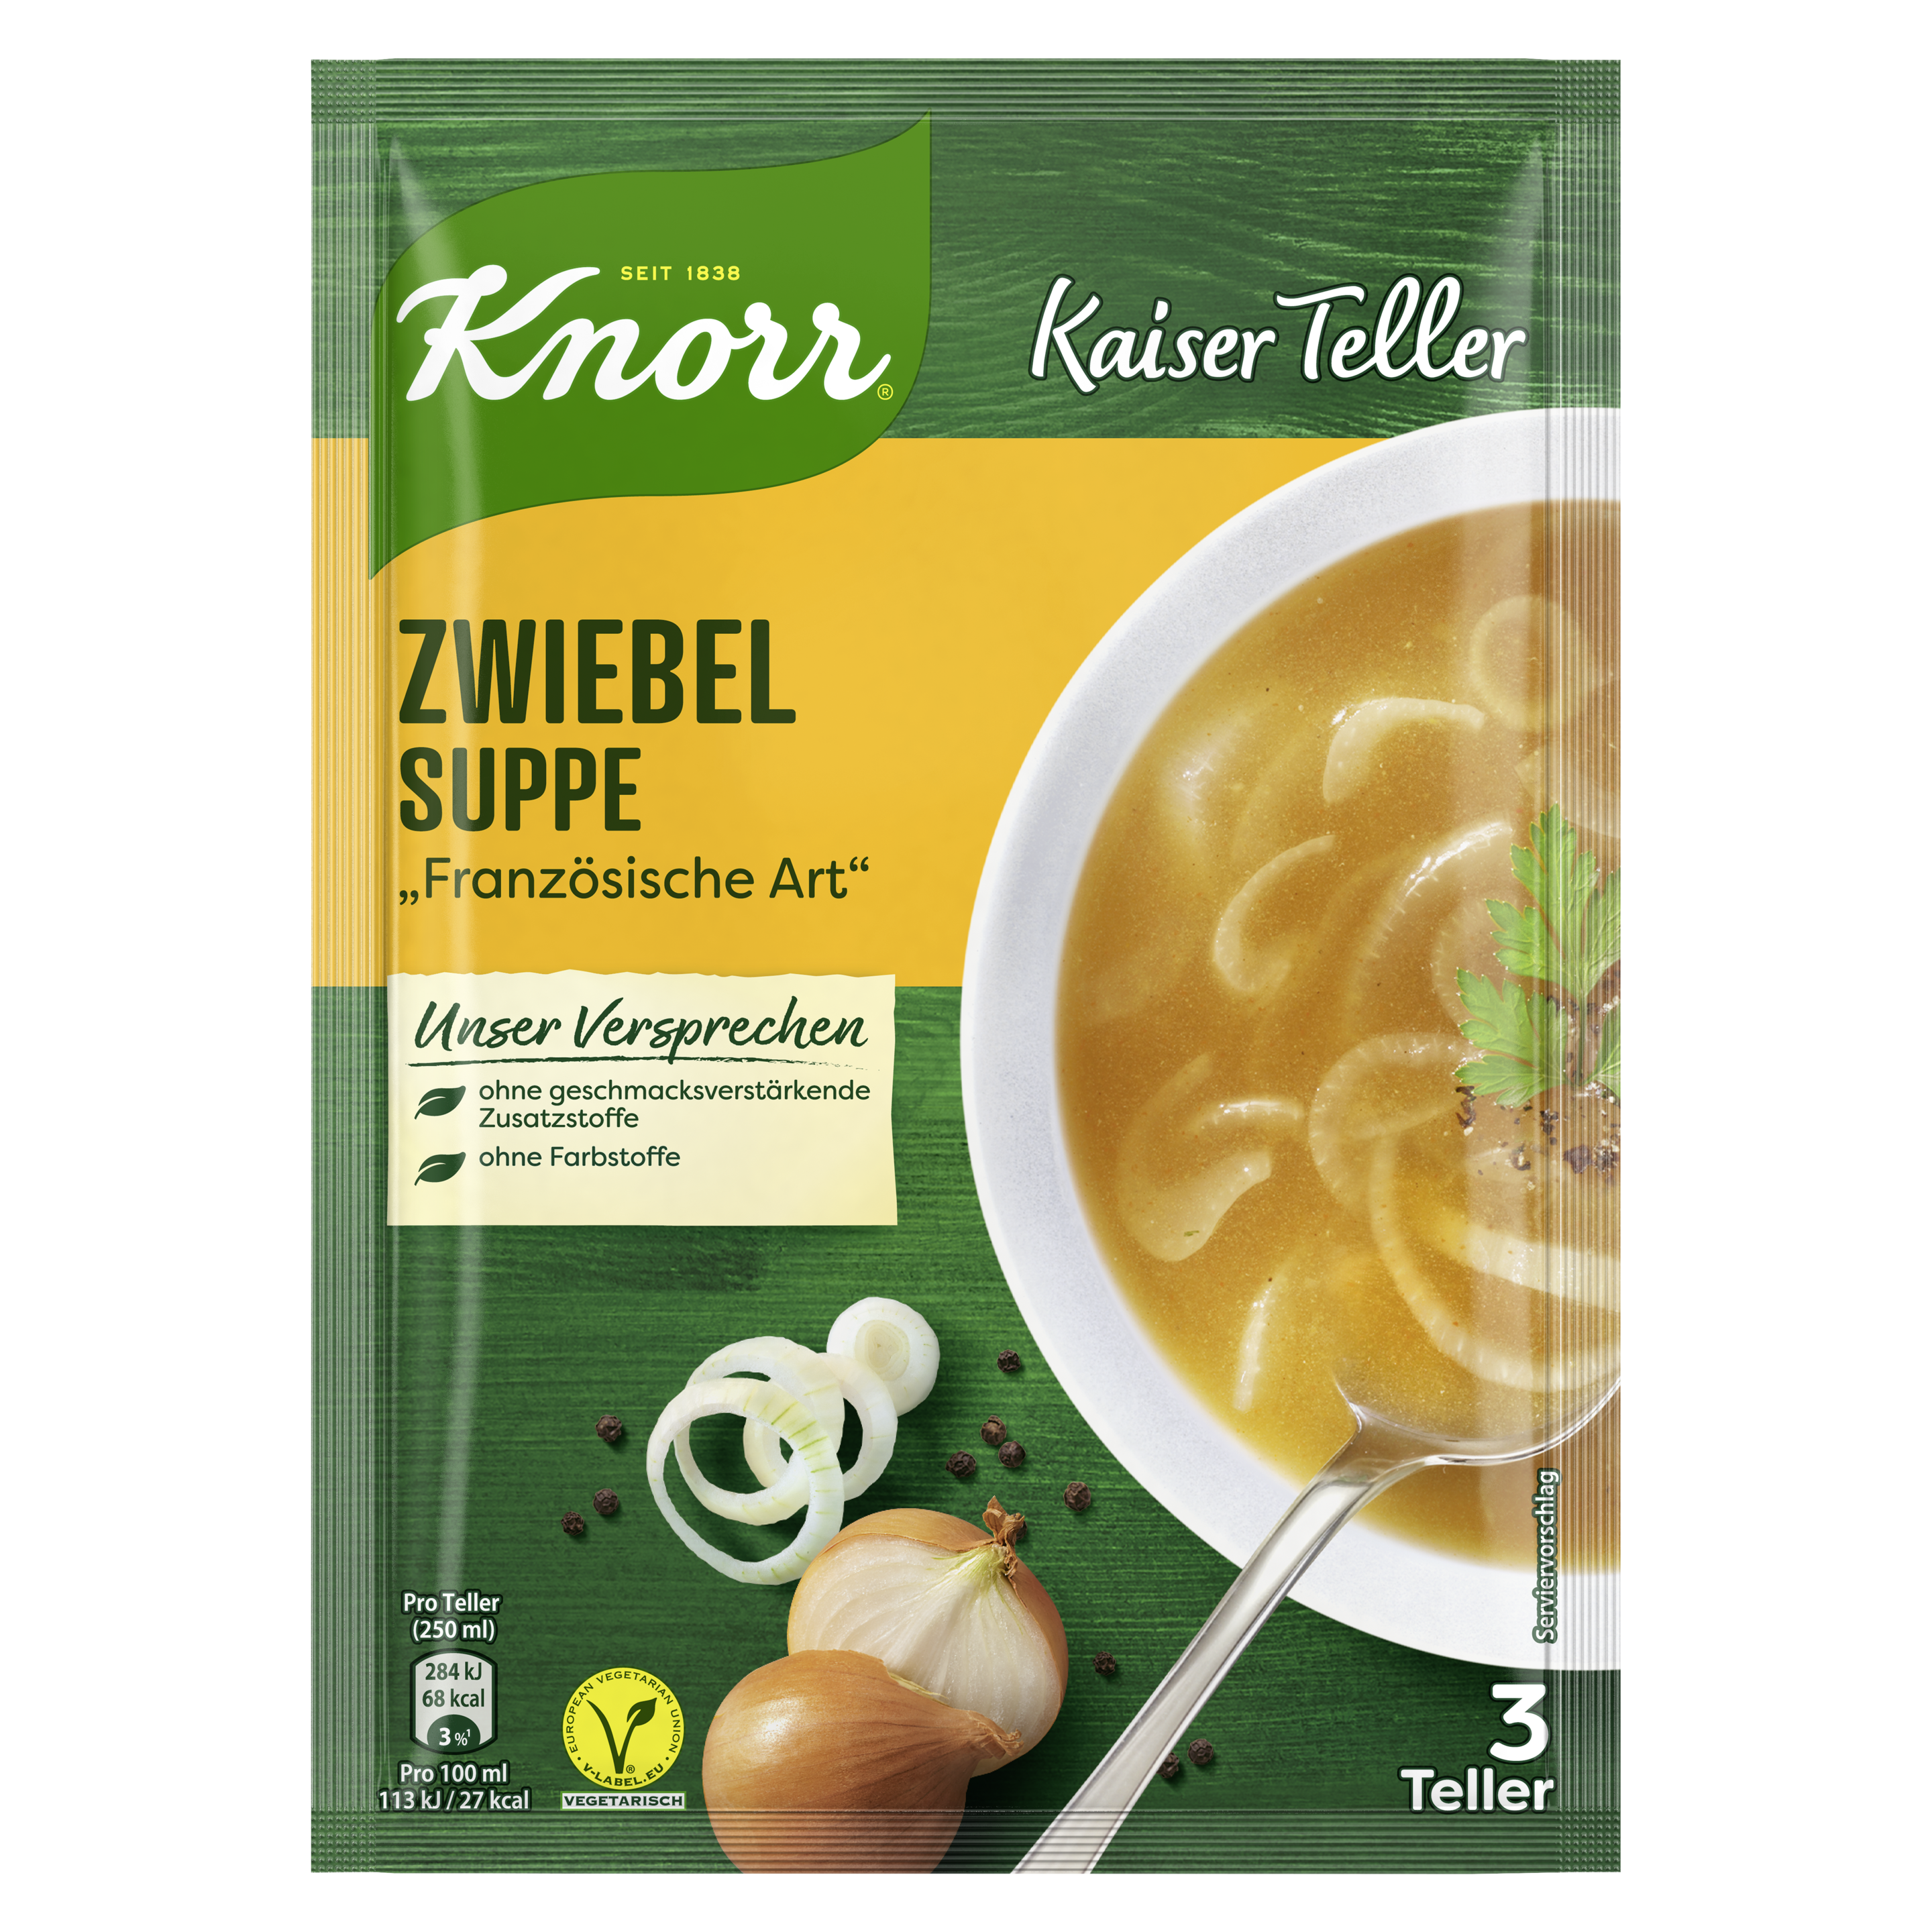 Knorr Kaiser Teller Zwiebel Suppe 3 Teller